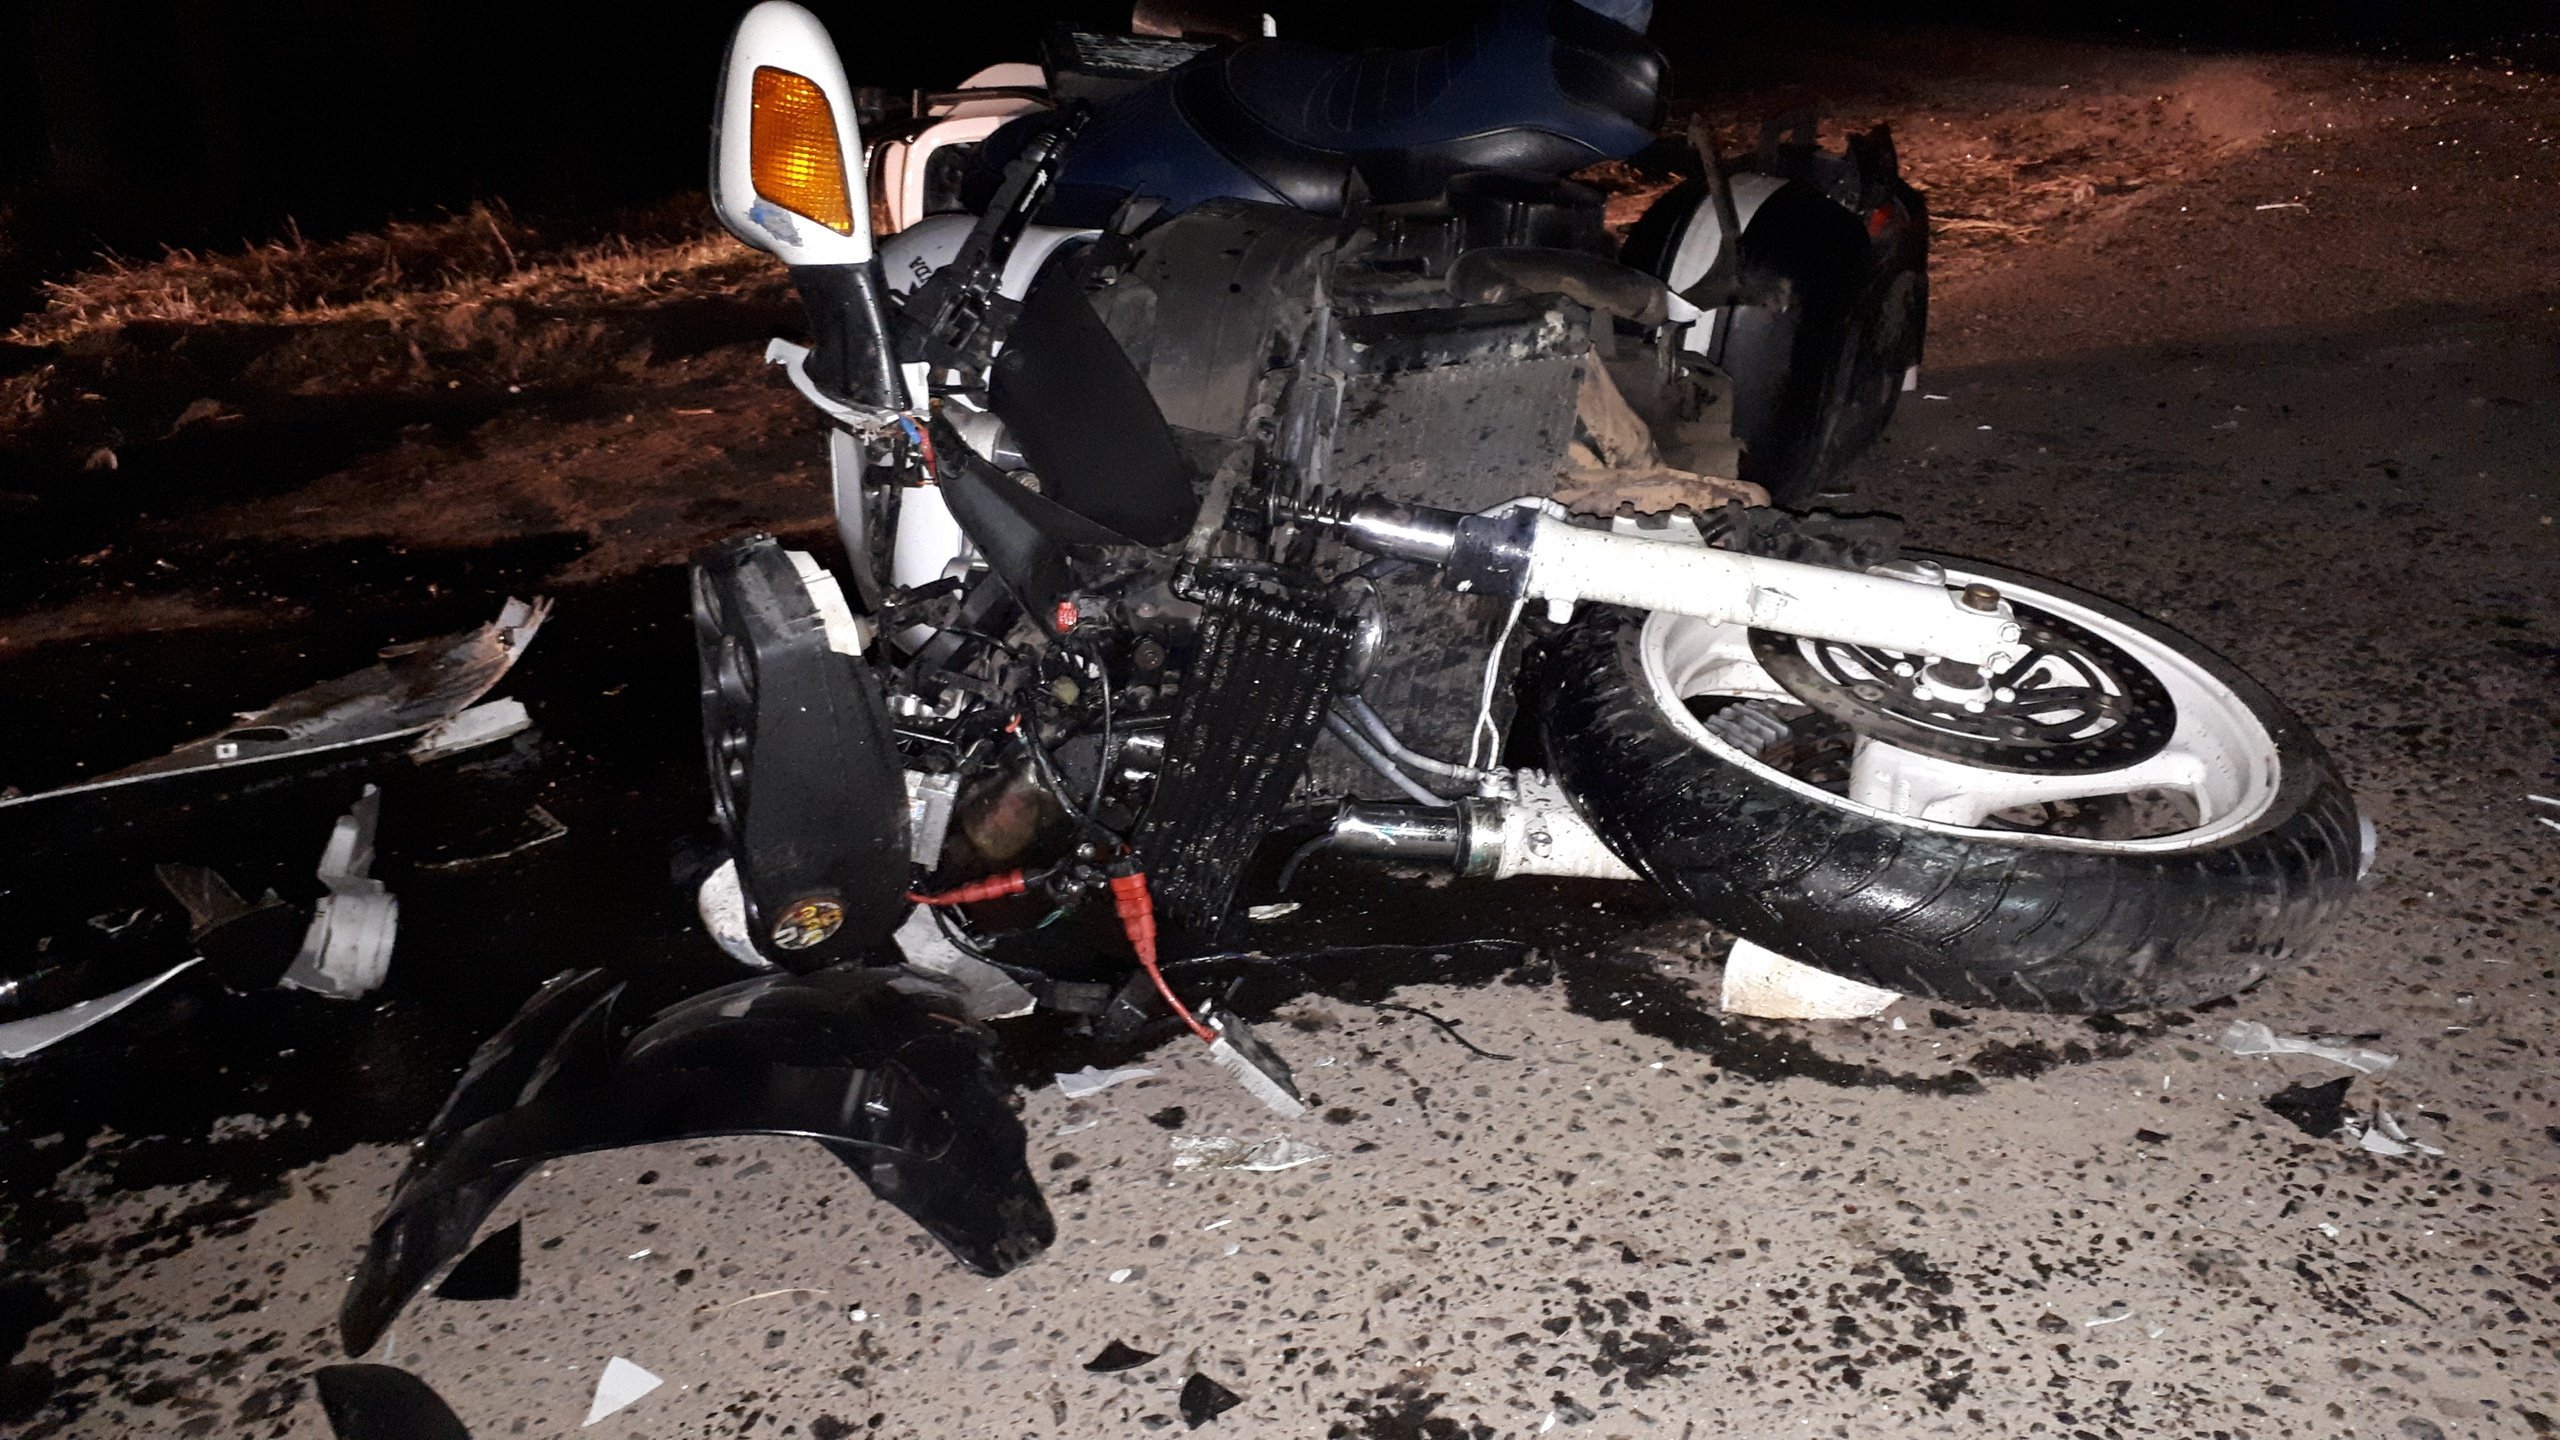 Мотоцикл догнал автомобиль. Разбитый мотоцикл на дороге.